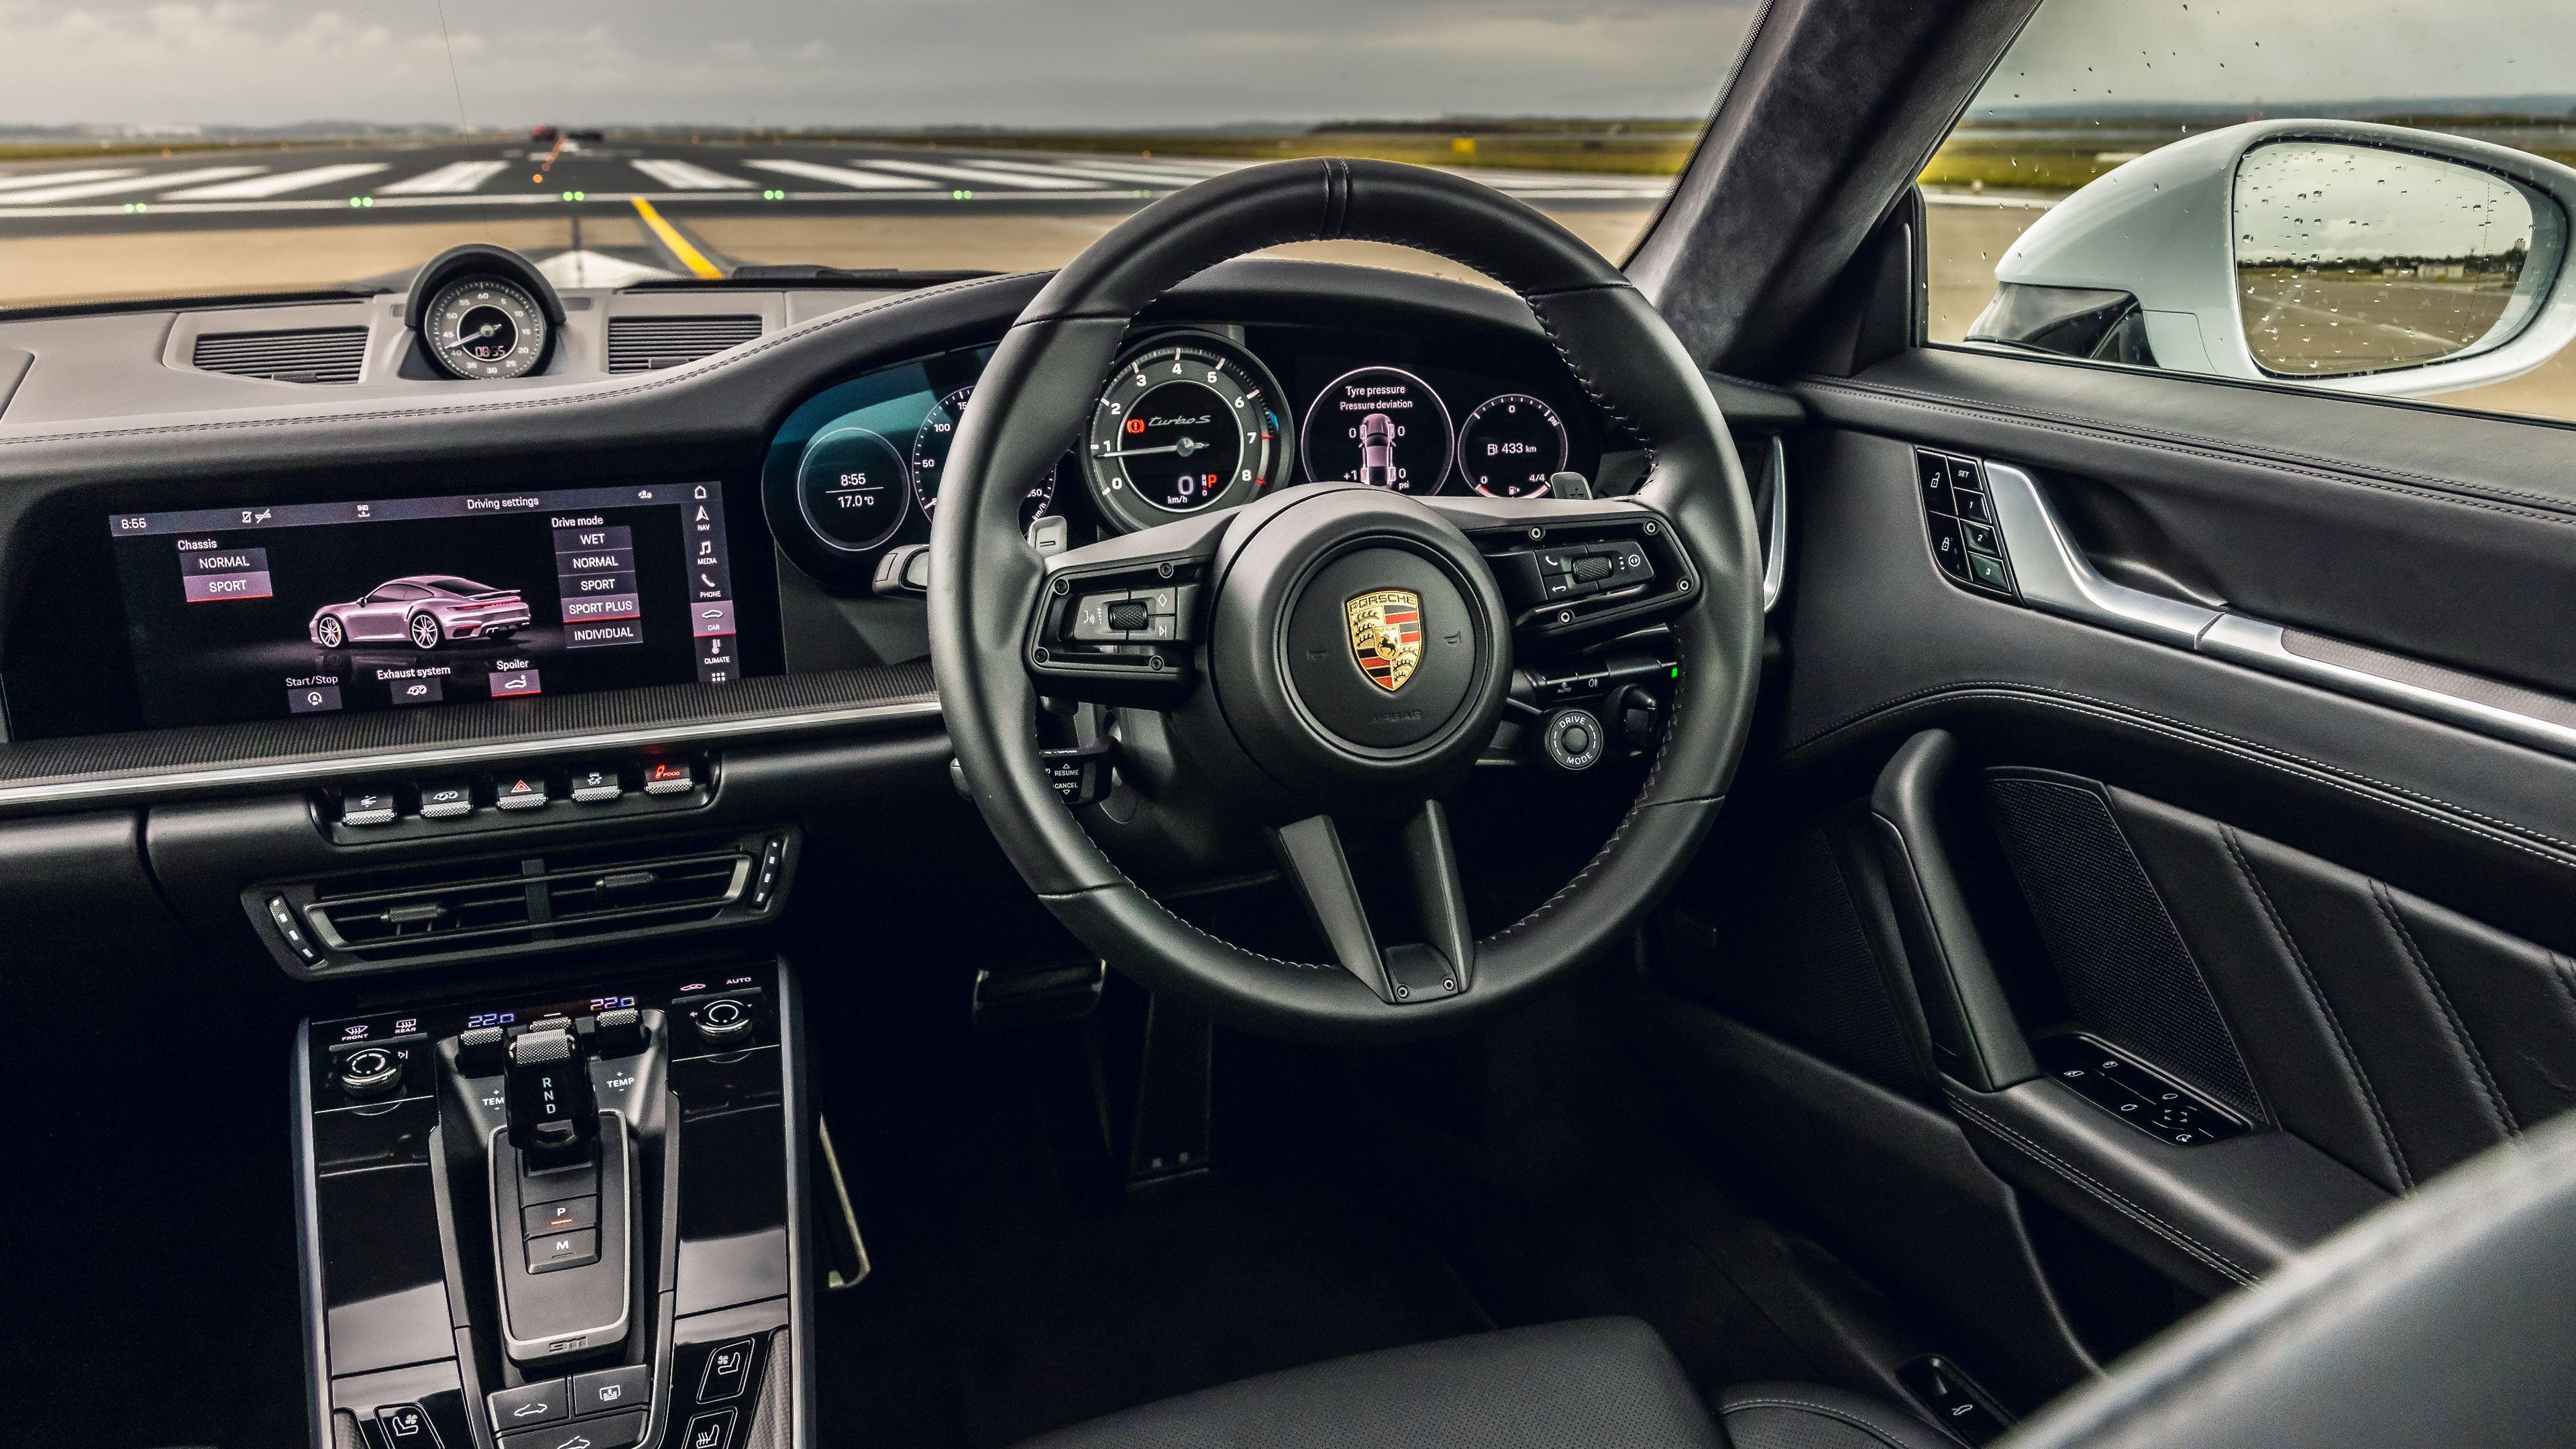 Porsche 911 Turbo S 2020 4K Interior Wallpaper | HD Car Wallpapers | ID #16409